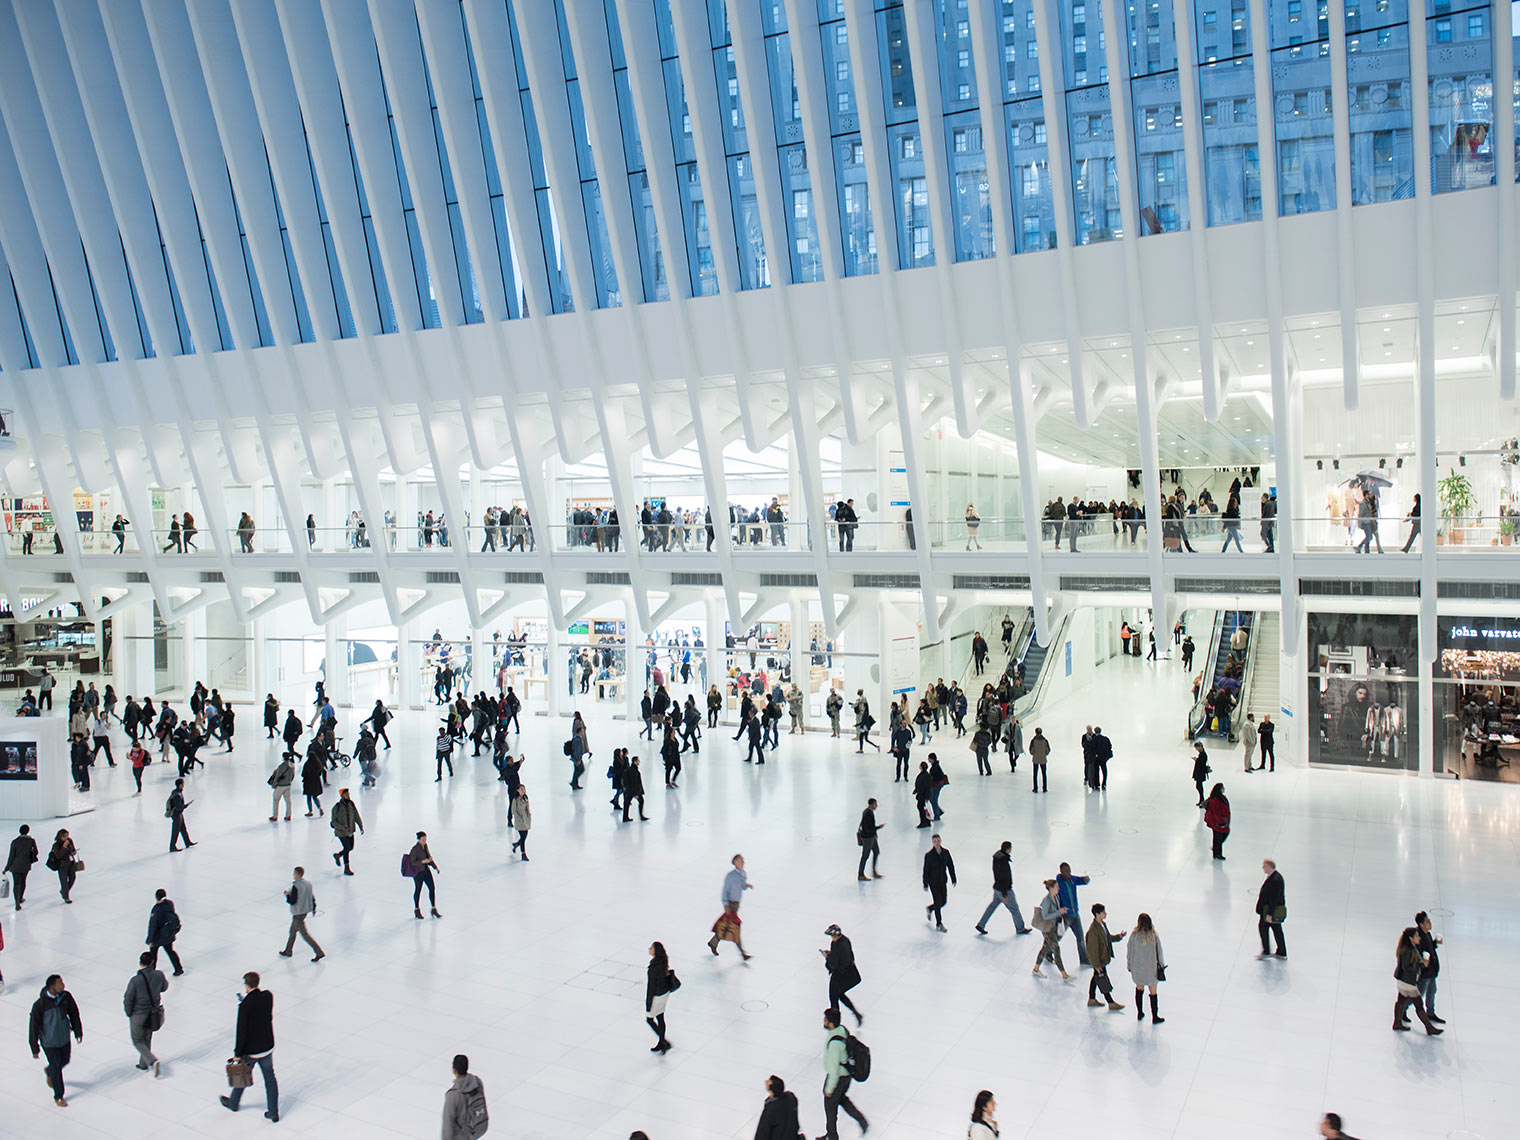 Transportation Hub designed by Santiago Calatrava